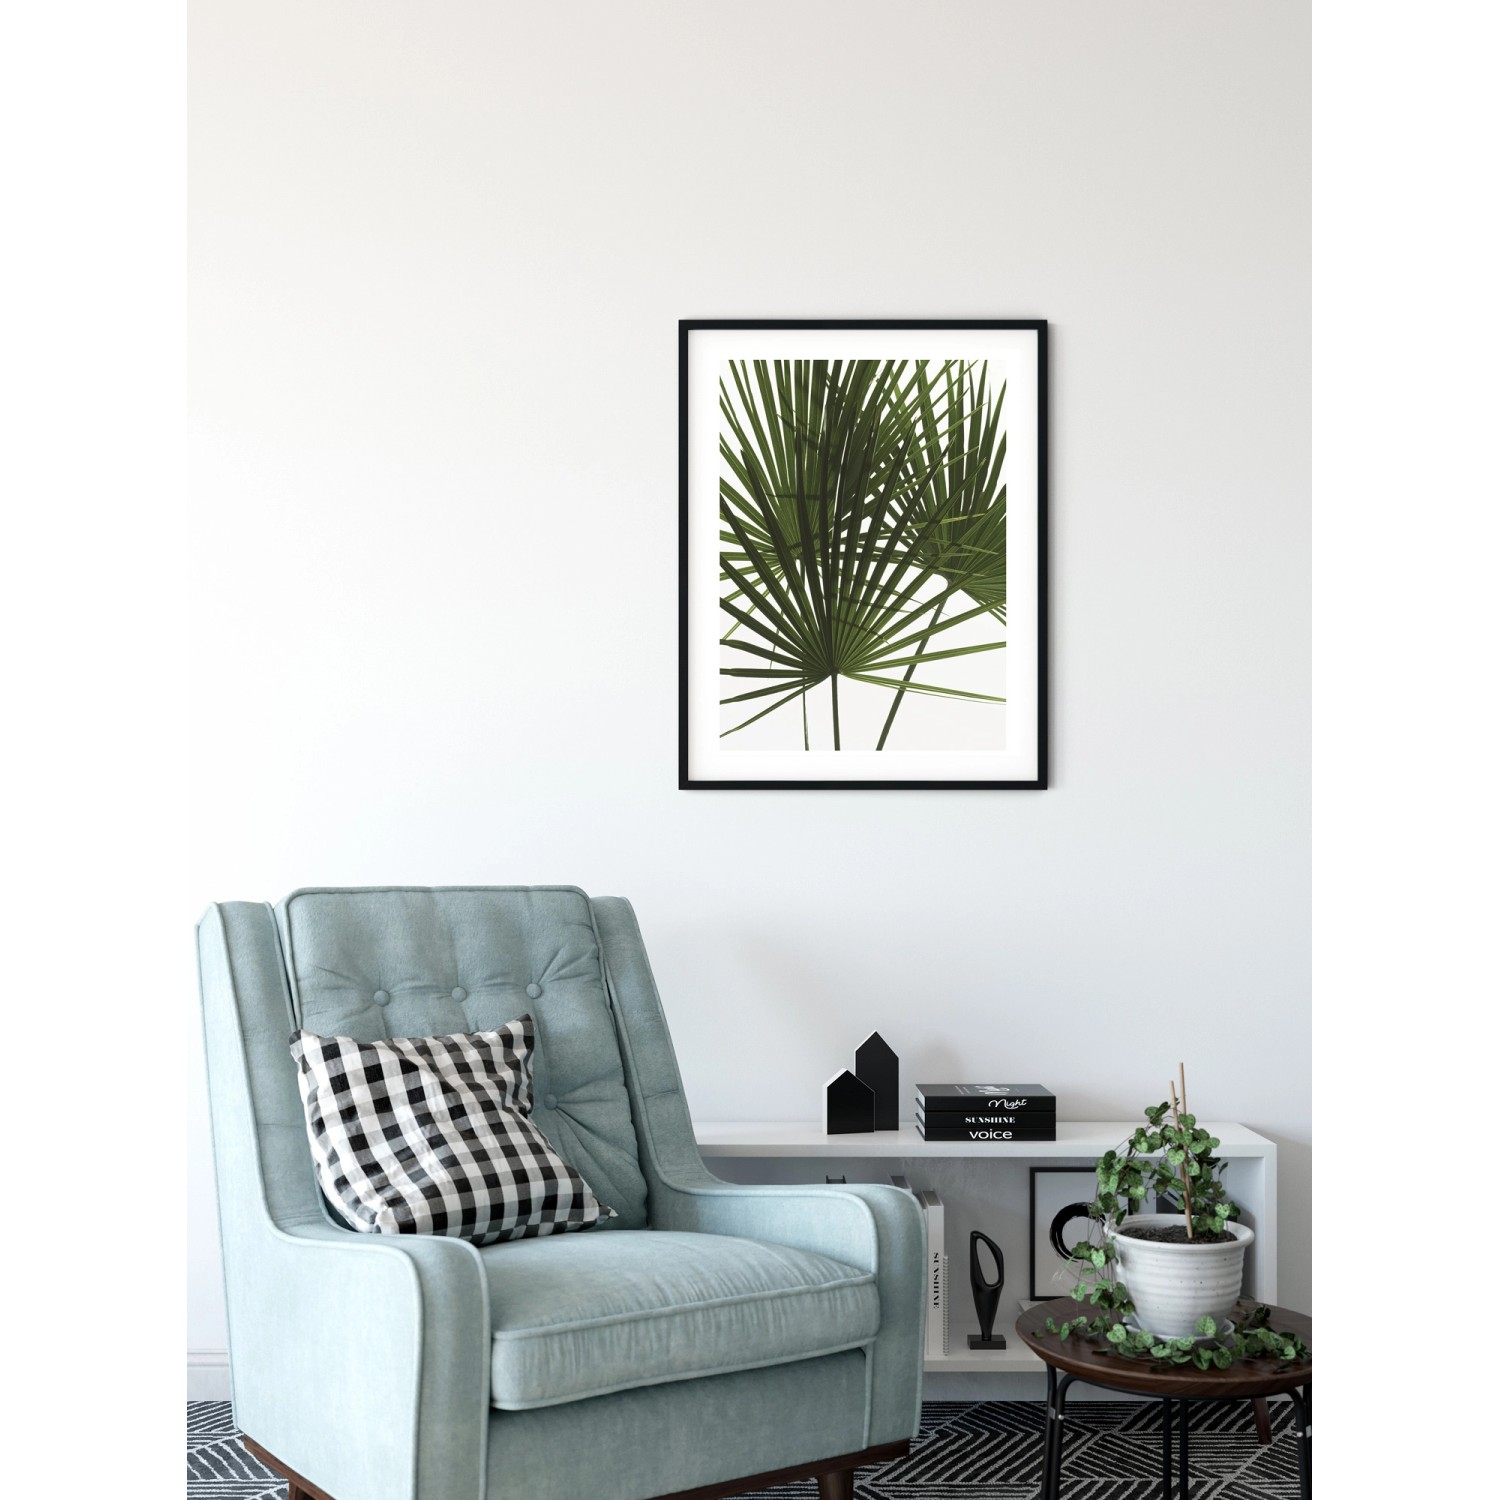 Komar Wandbild Palmtree Leaves 30 cm x 40 cm kaufen bei OBI